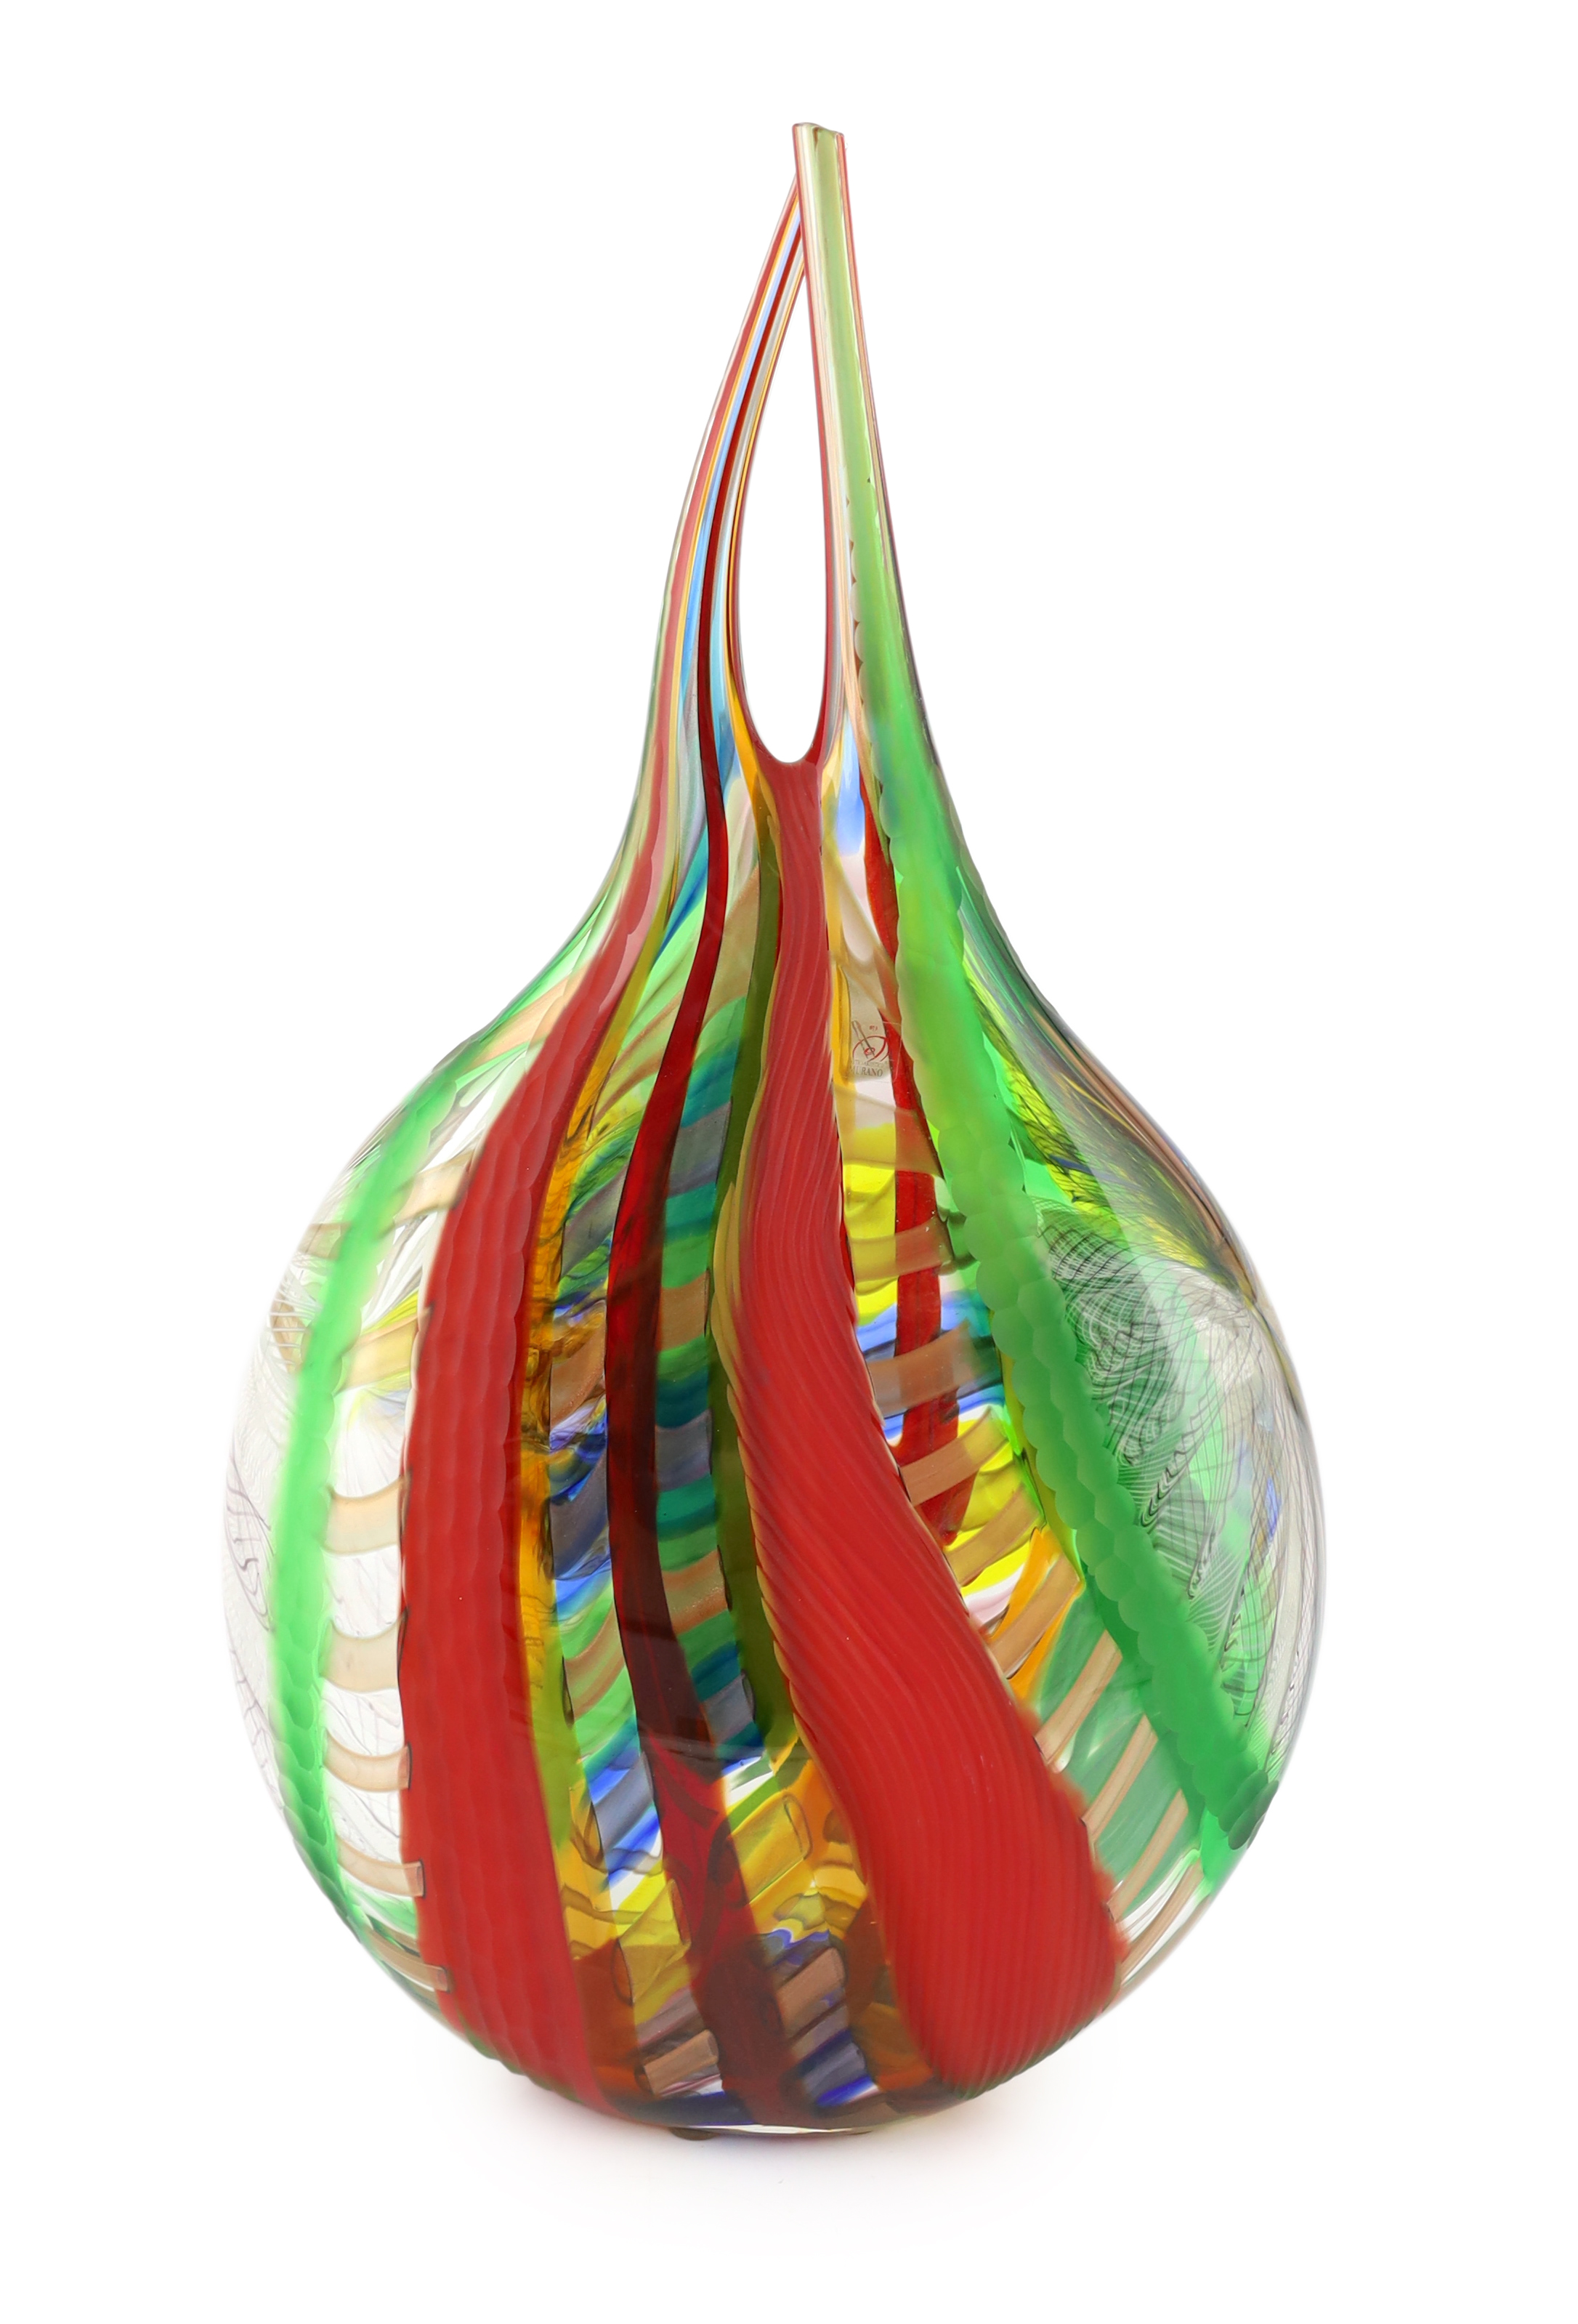 Gianluca Vidal (1976-), a tall Murano glass teardrop shaped vase